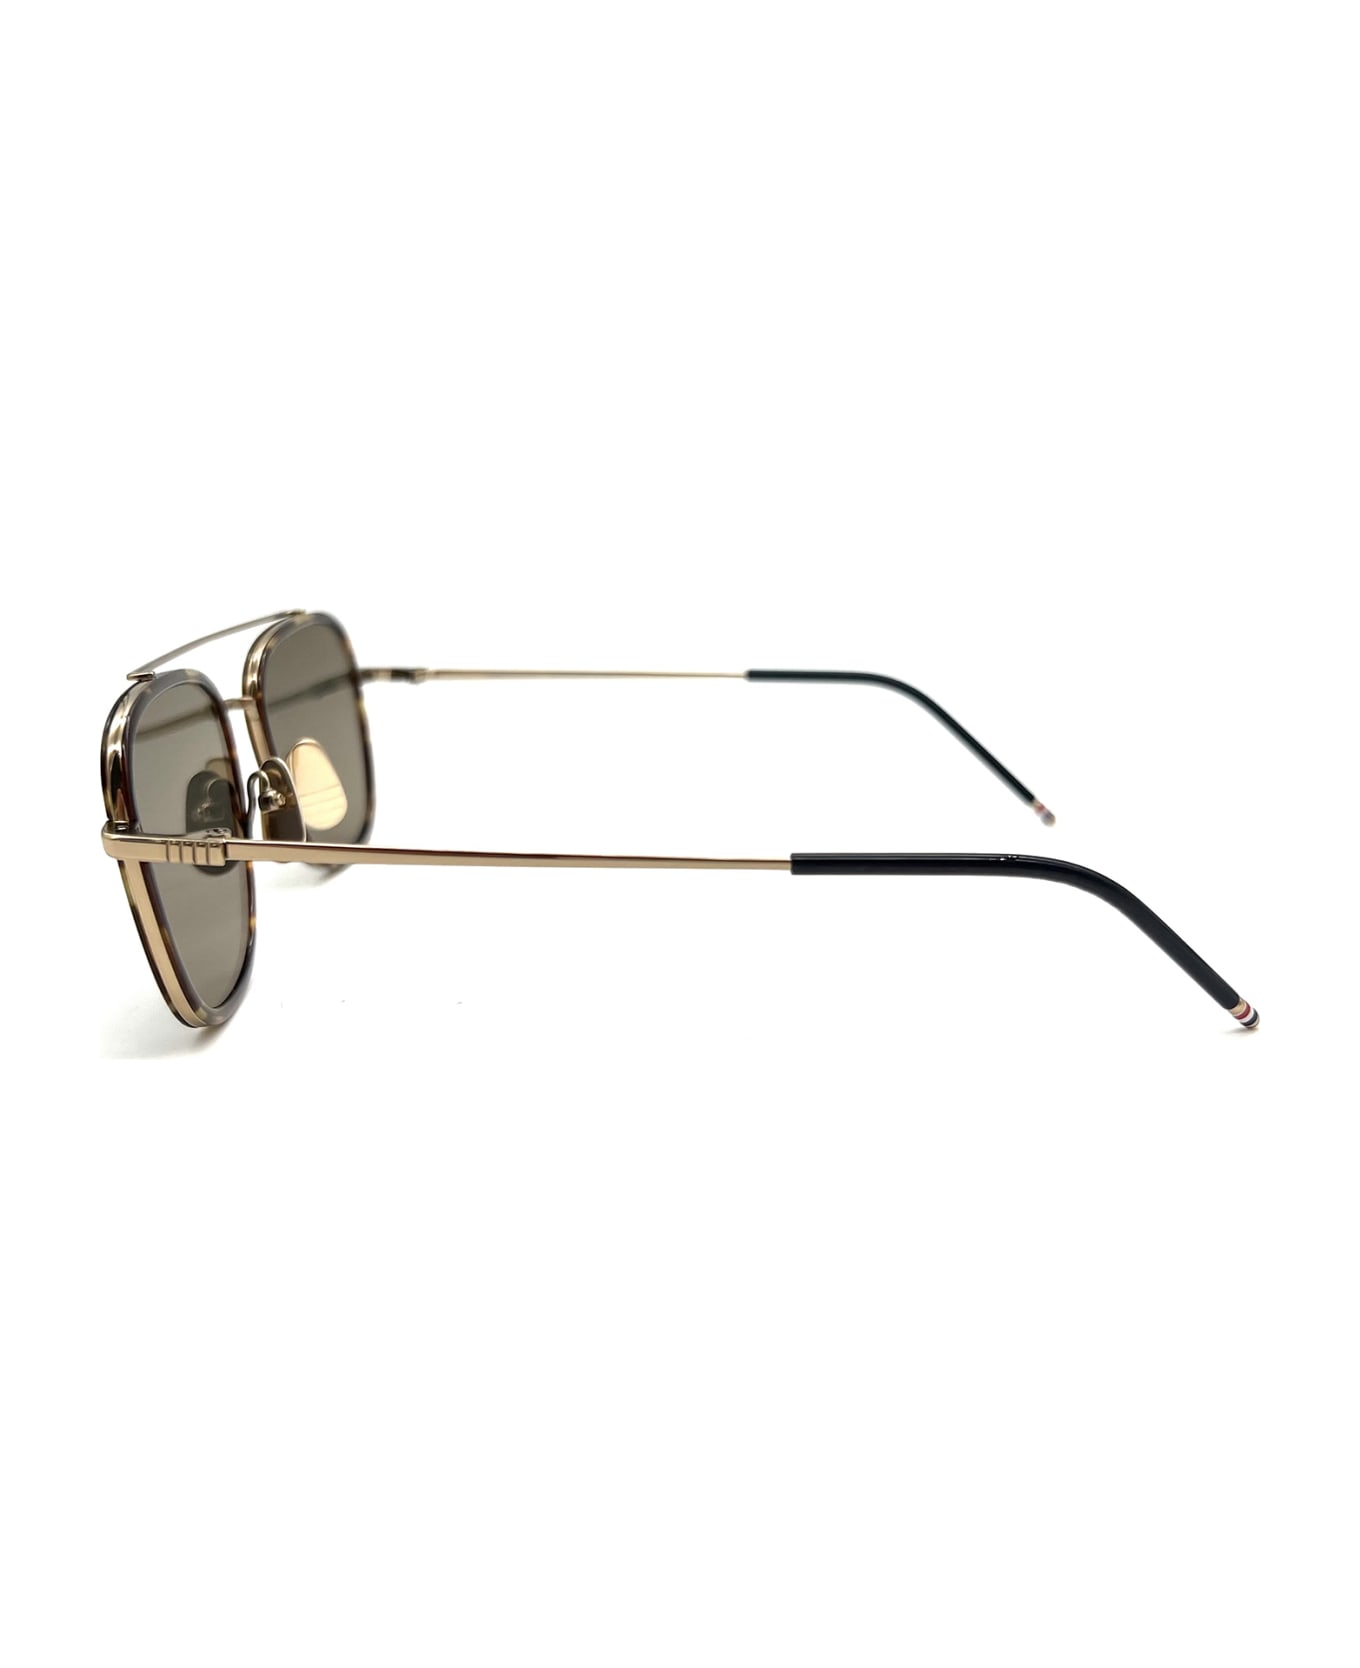 Thom Browne Ues800a-g0003-215-51 Sunglasses - 215 MED